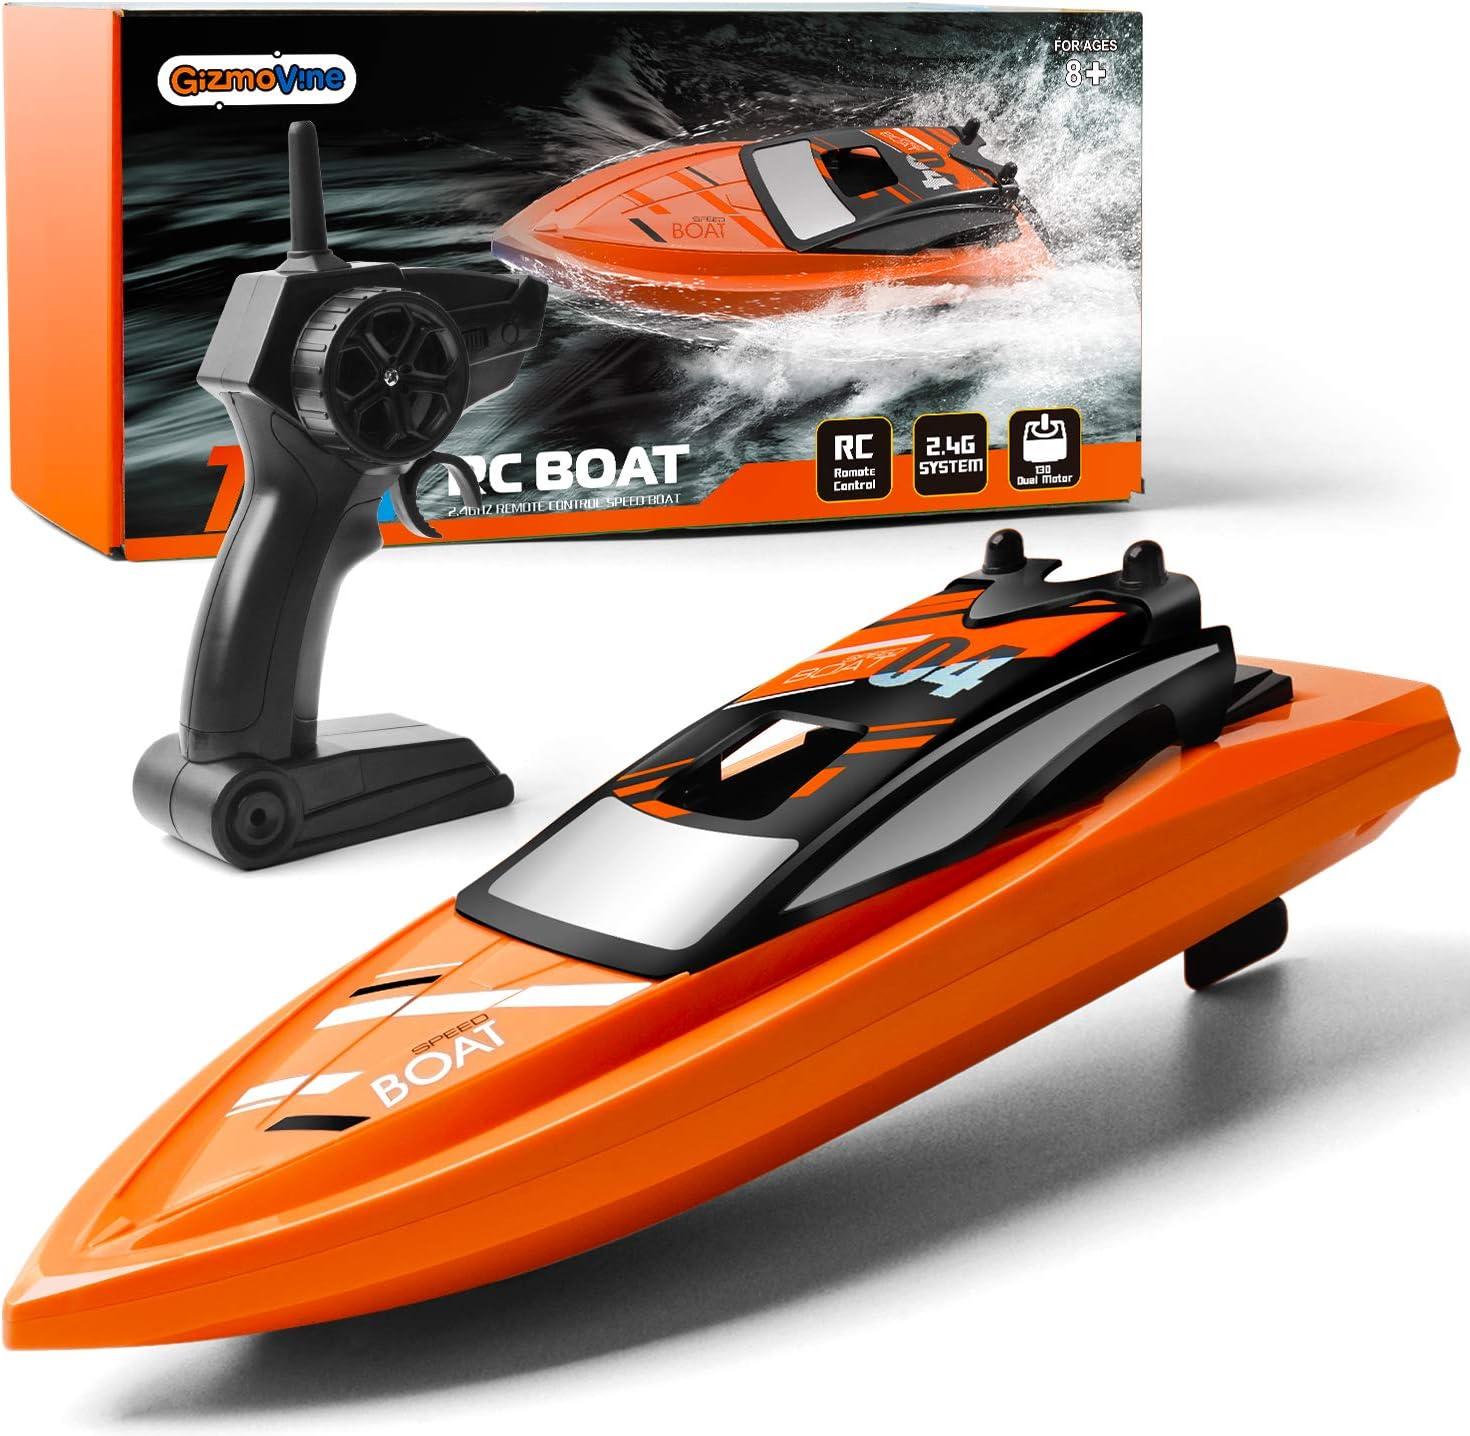 Radio Controlled Boats Near Me: Ensure a Safe and Fun Experience with Radio Controlled Boats Near Me